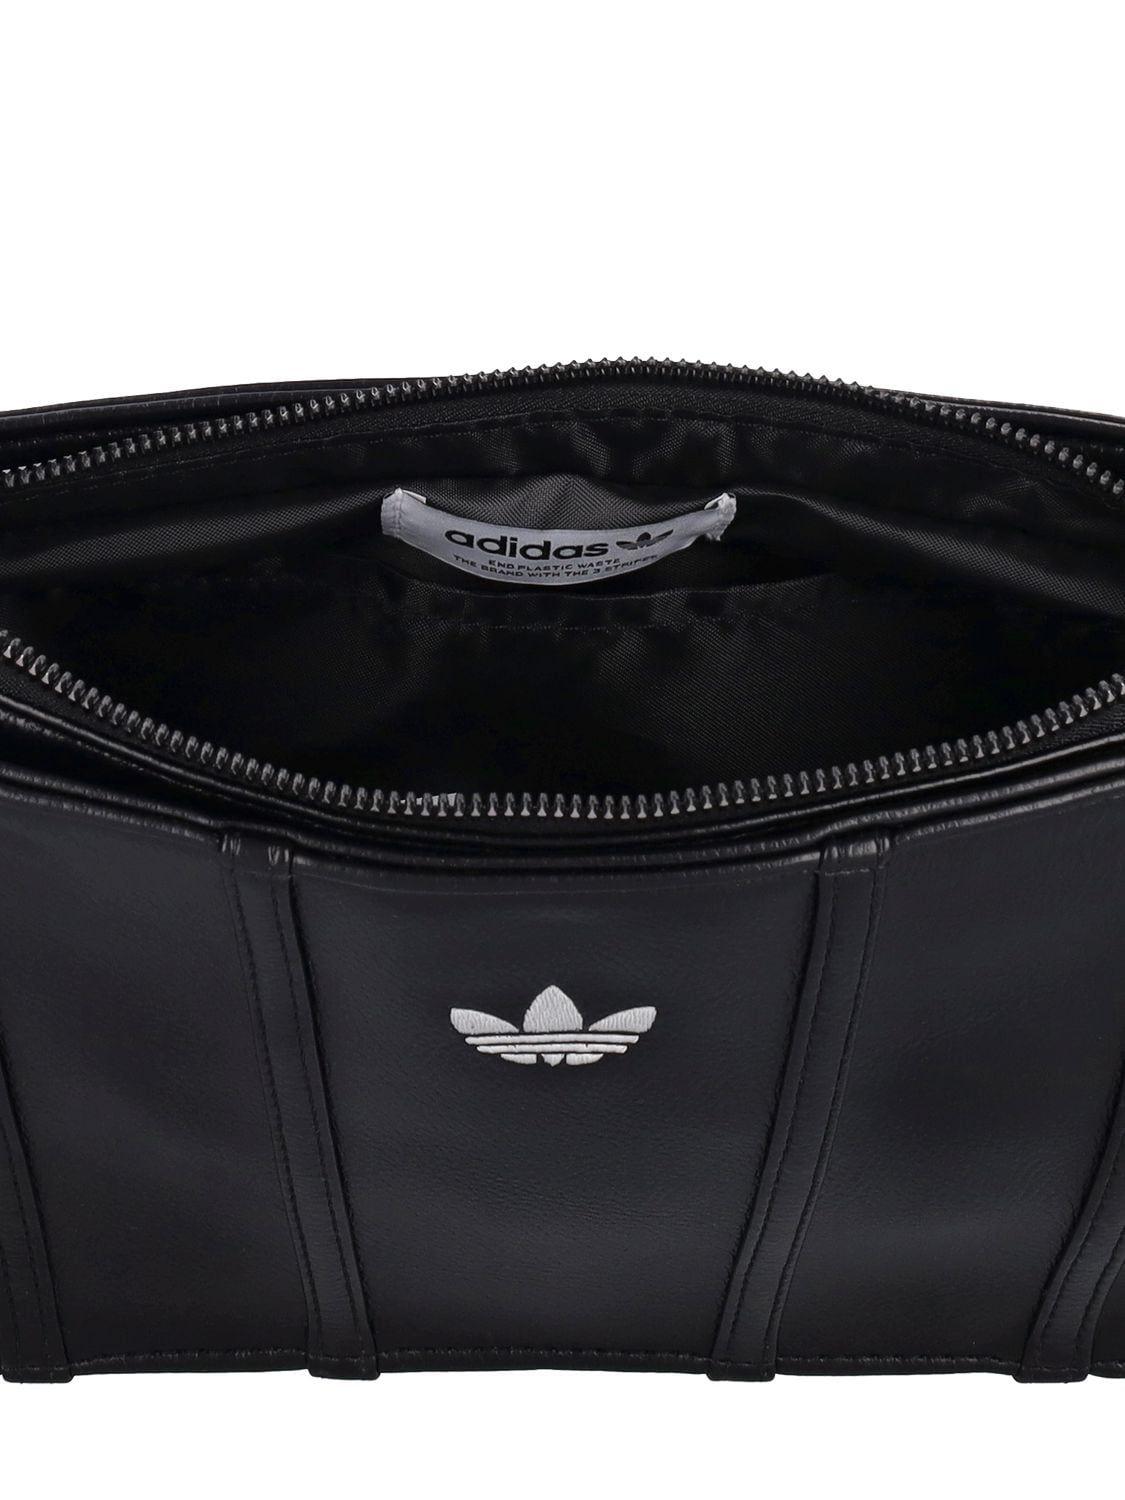 adidas Originals Mini Airline Shoulder Bag in Black | Lyst